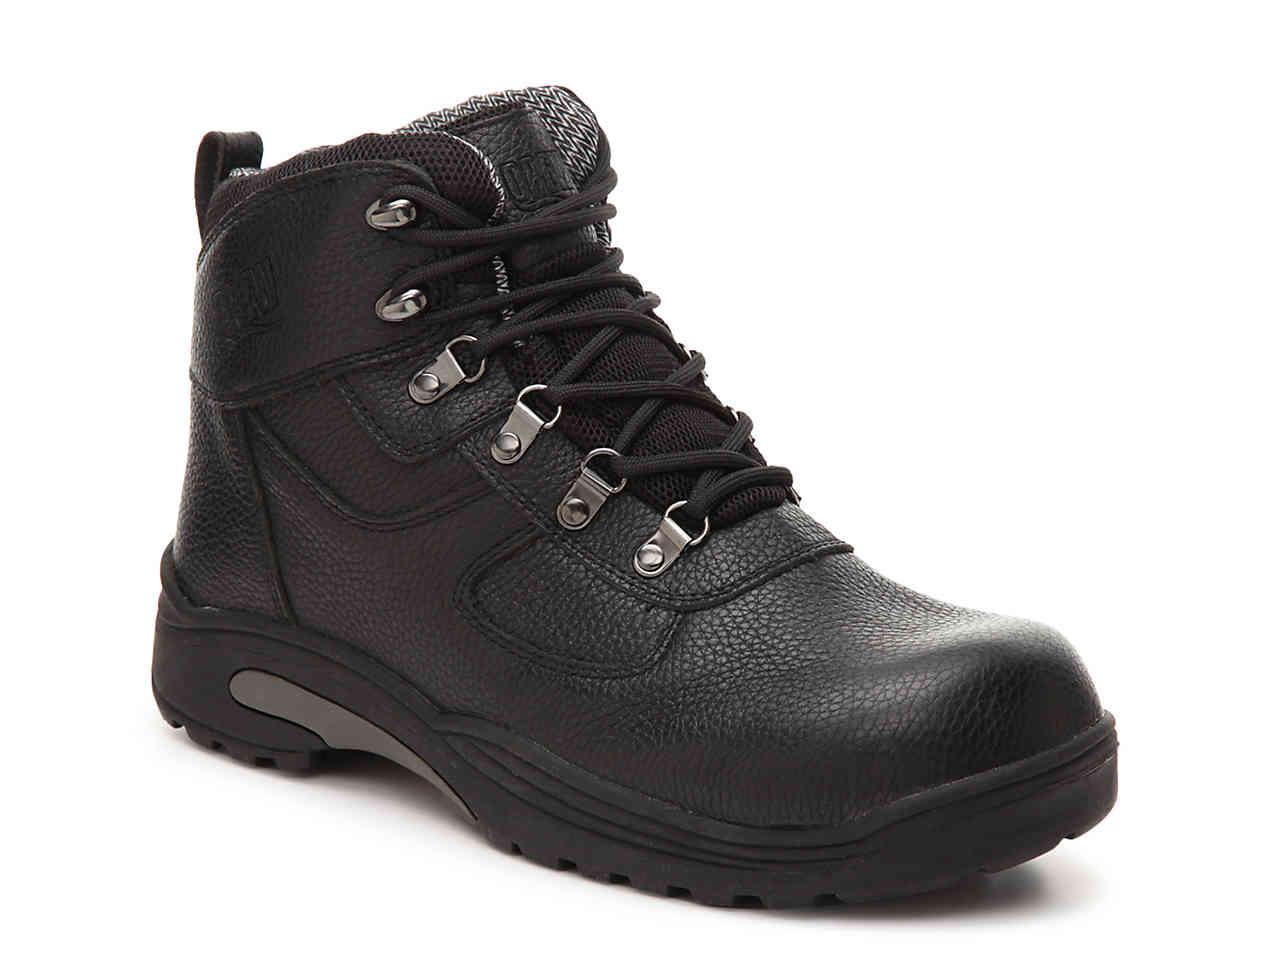 Drew Leather Rockfort Work Boot in Black for Men - Lyst